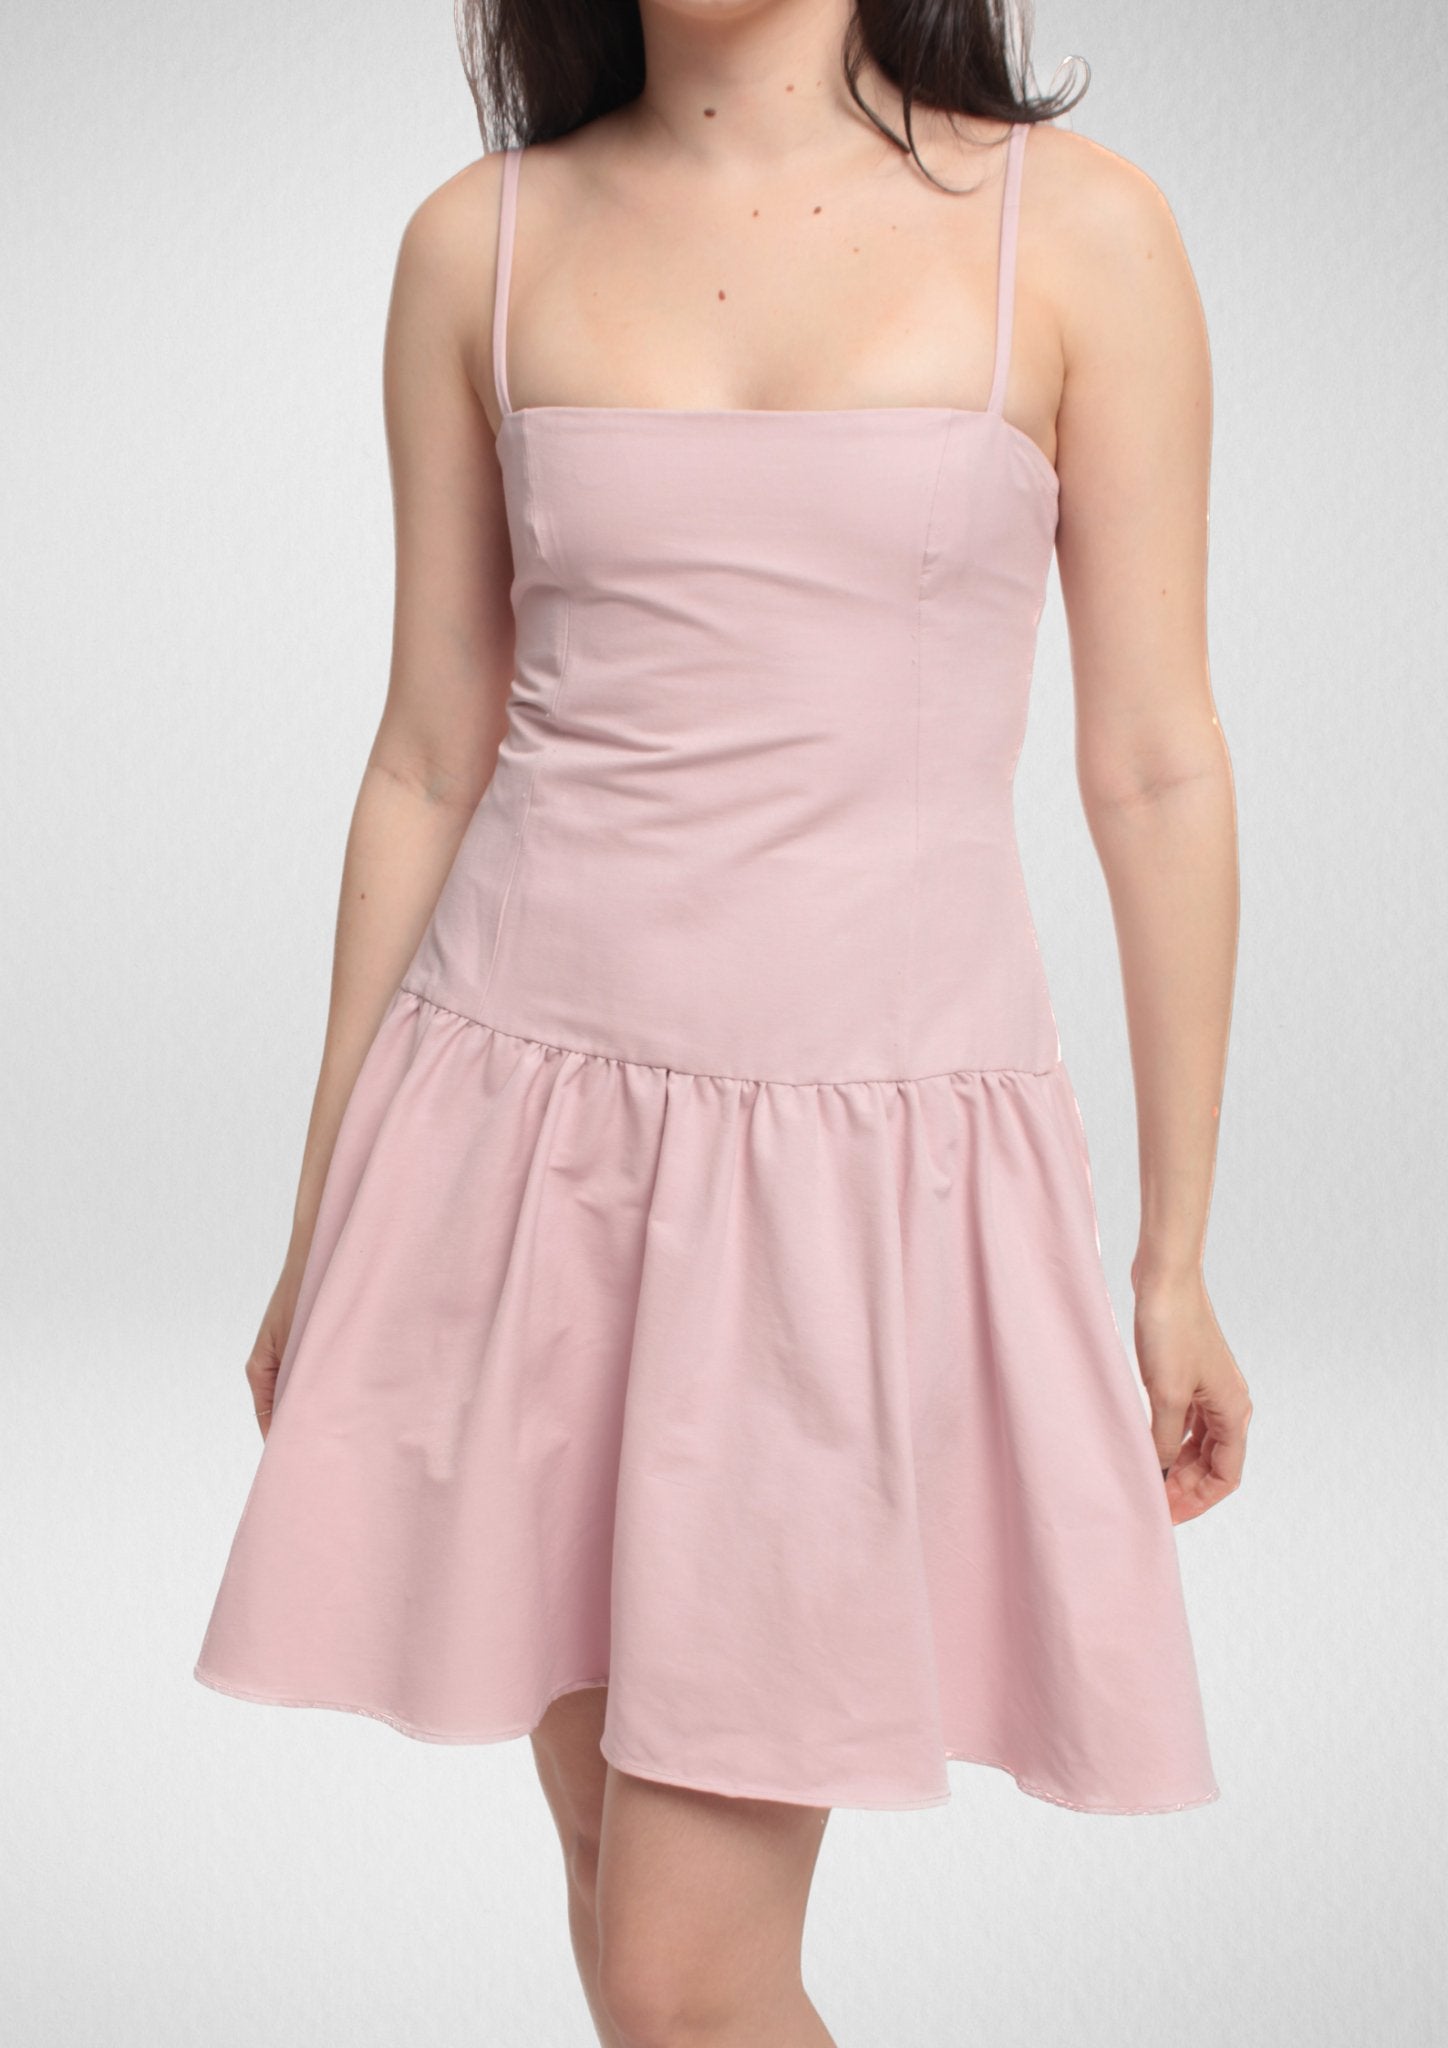 Cottagecore Elegant Dress Sewing Pattern with Mini or Maxi Alternative [Aurora] - Friedlies